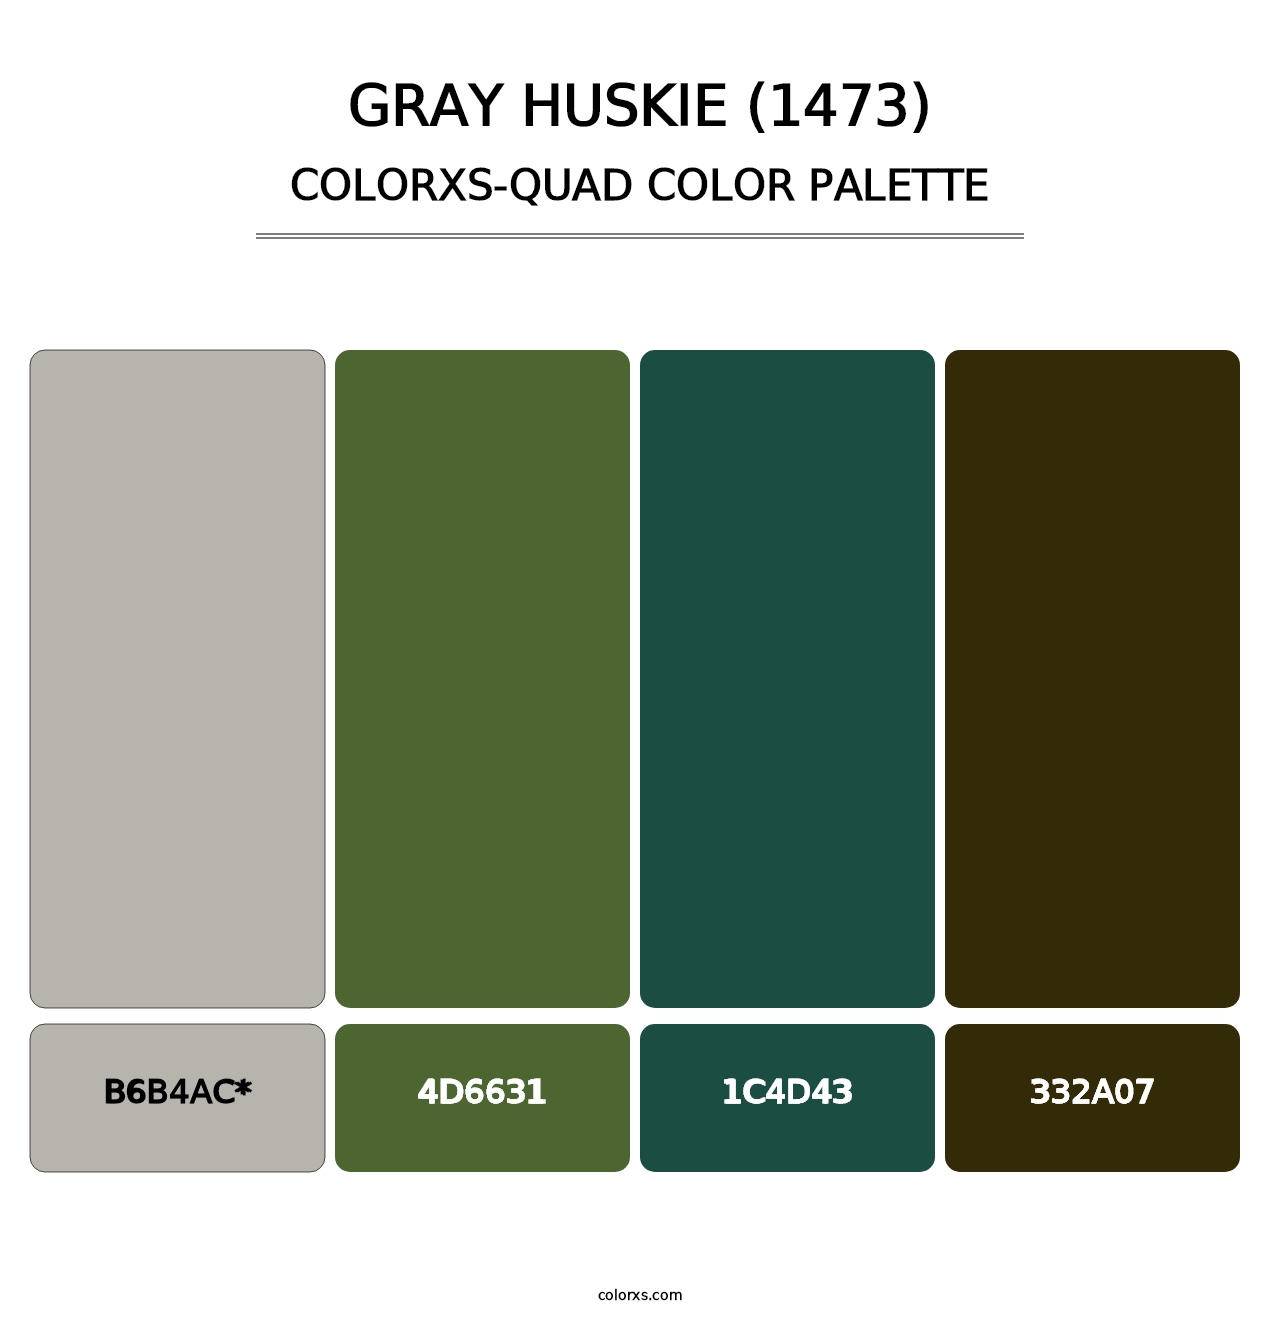 Gray Huskie (1473) - Colorxs Quad Palette